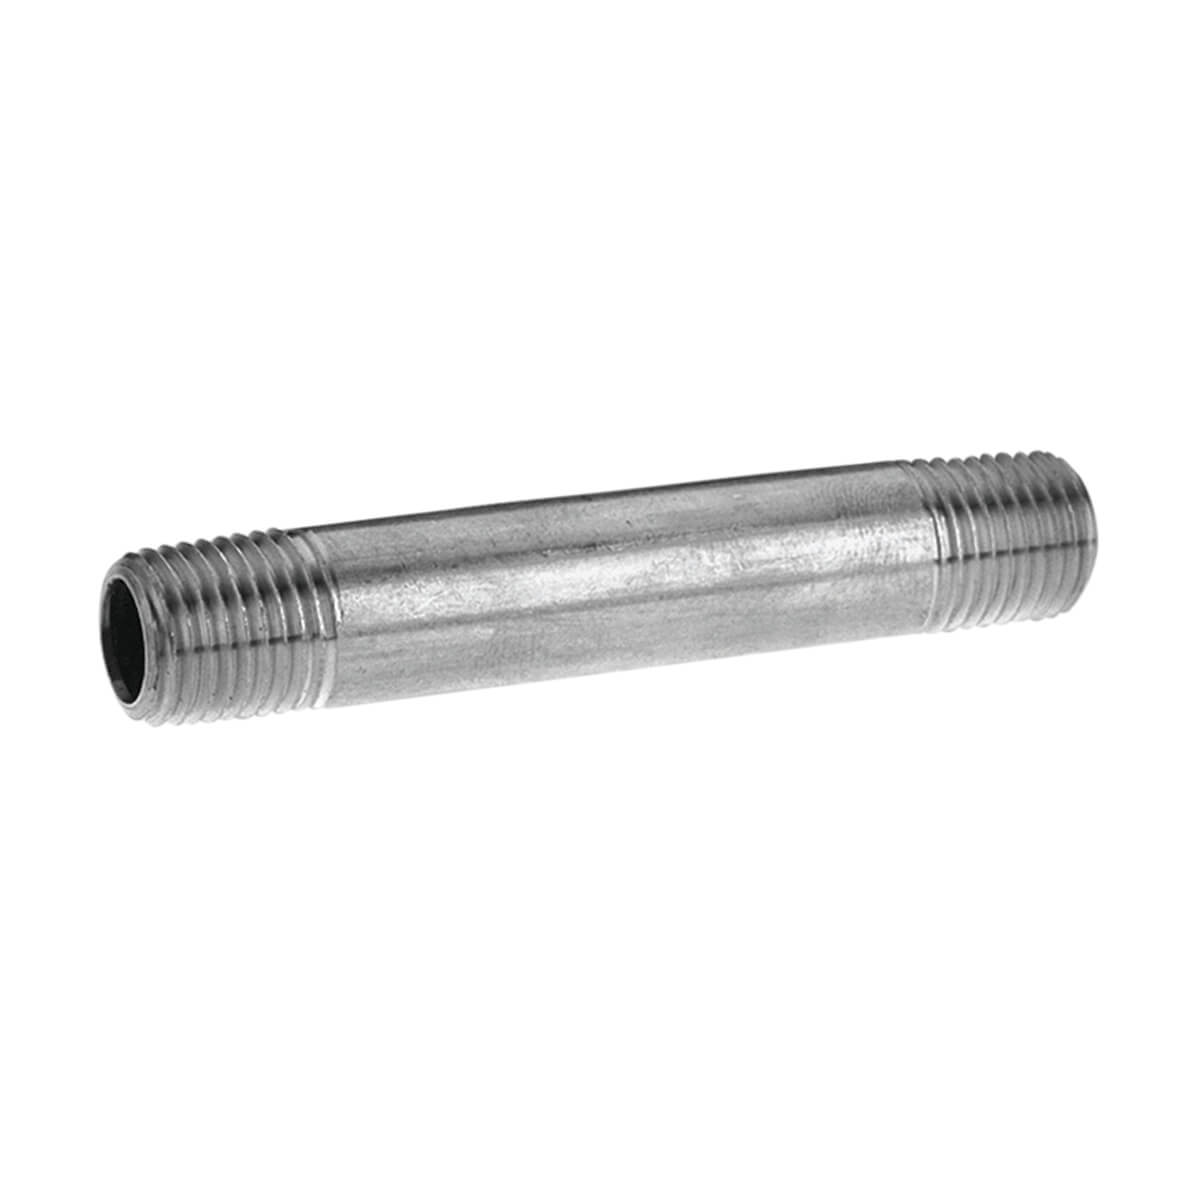 Pipe Nipple Galvanized Steel - 1/2-in x CLOSE